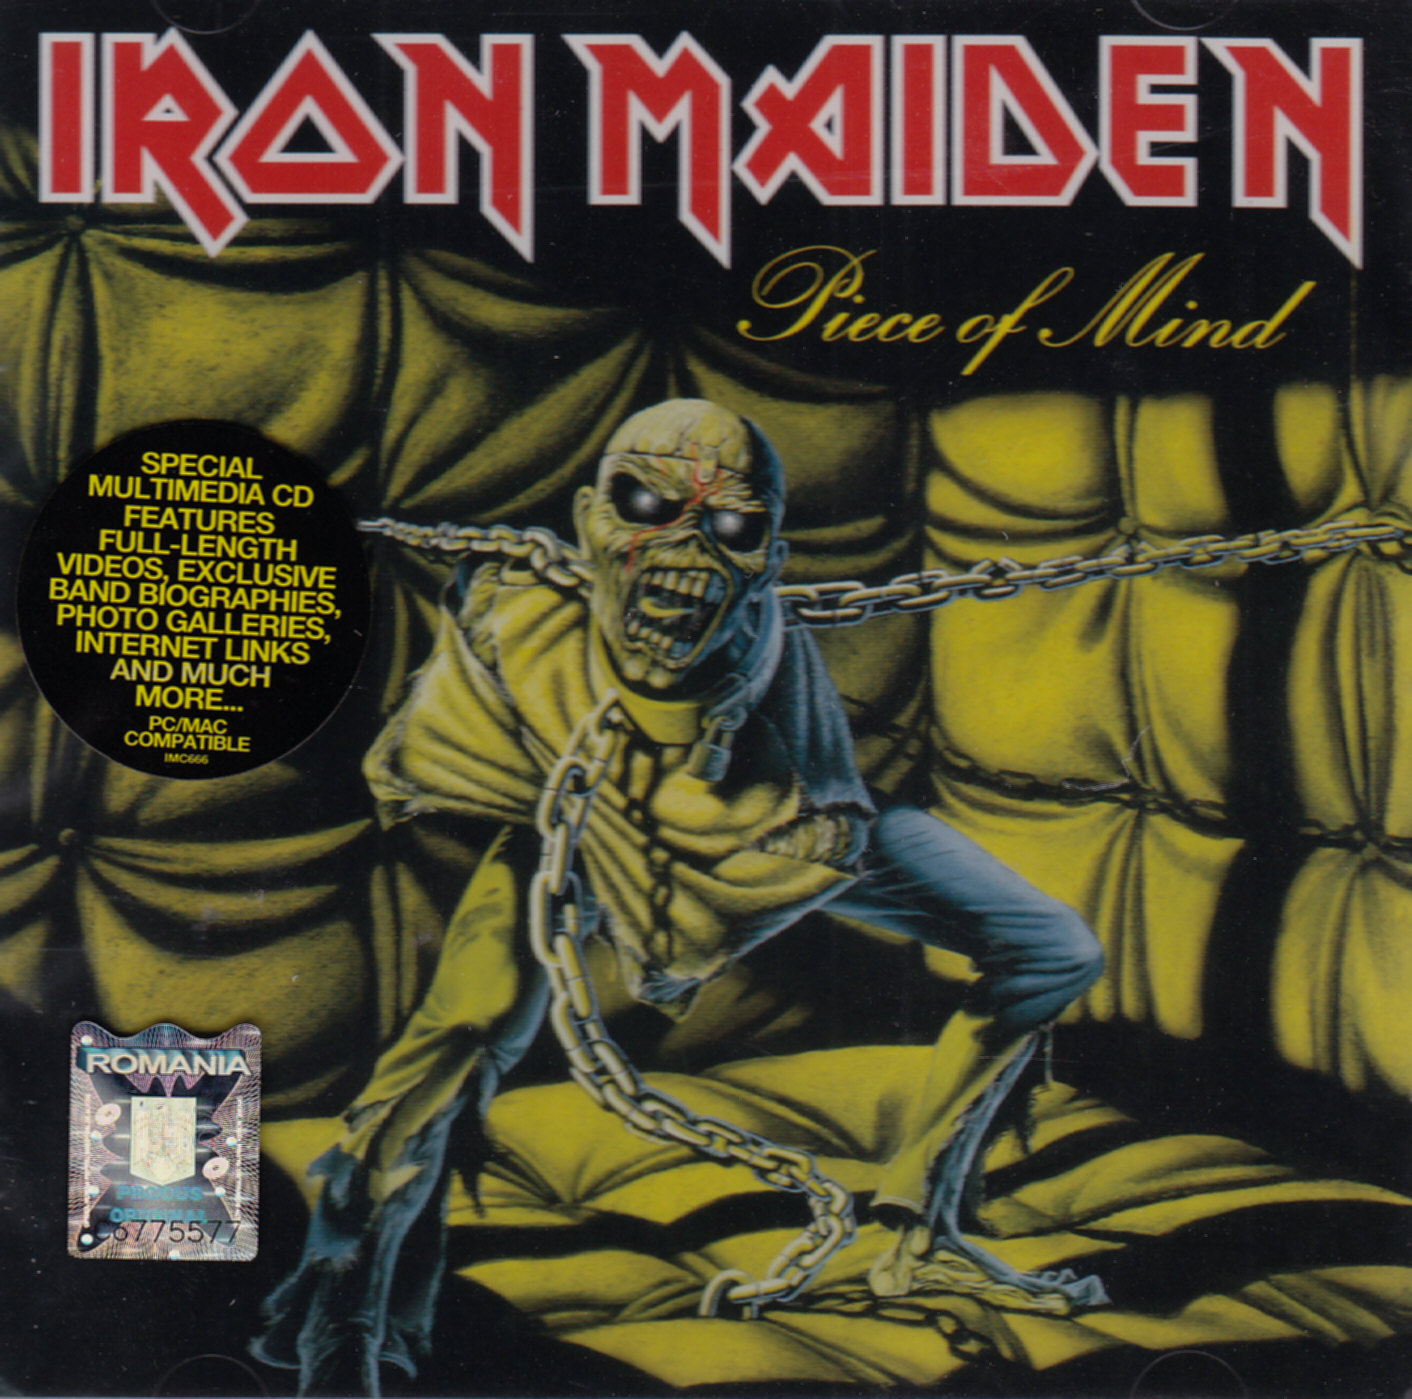 CD Iron Maiden - Piece of mind